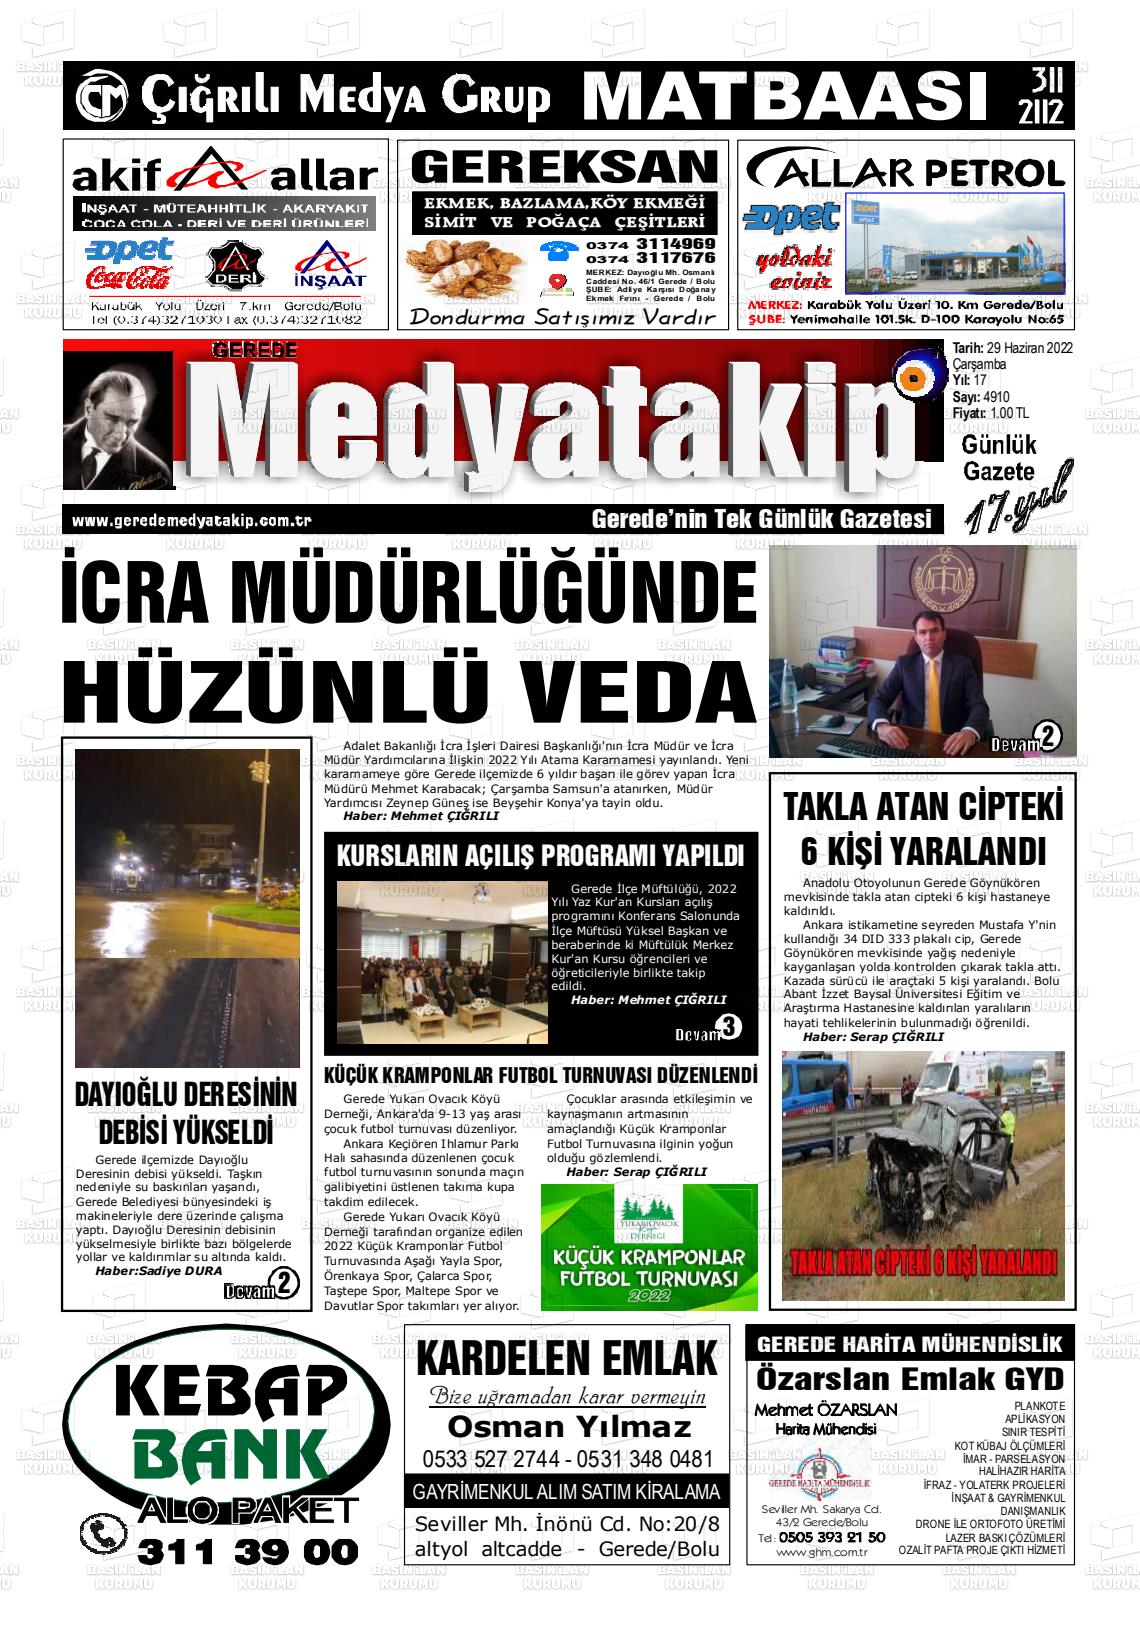 29 Haziran 2022 Gerede Medya Takip Gazete Manşeti